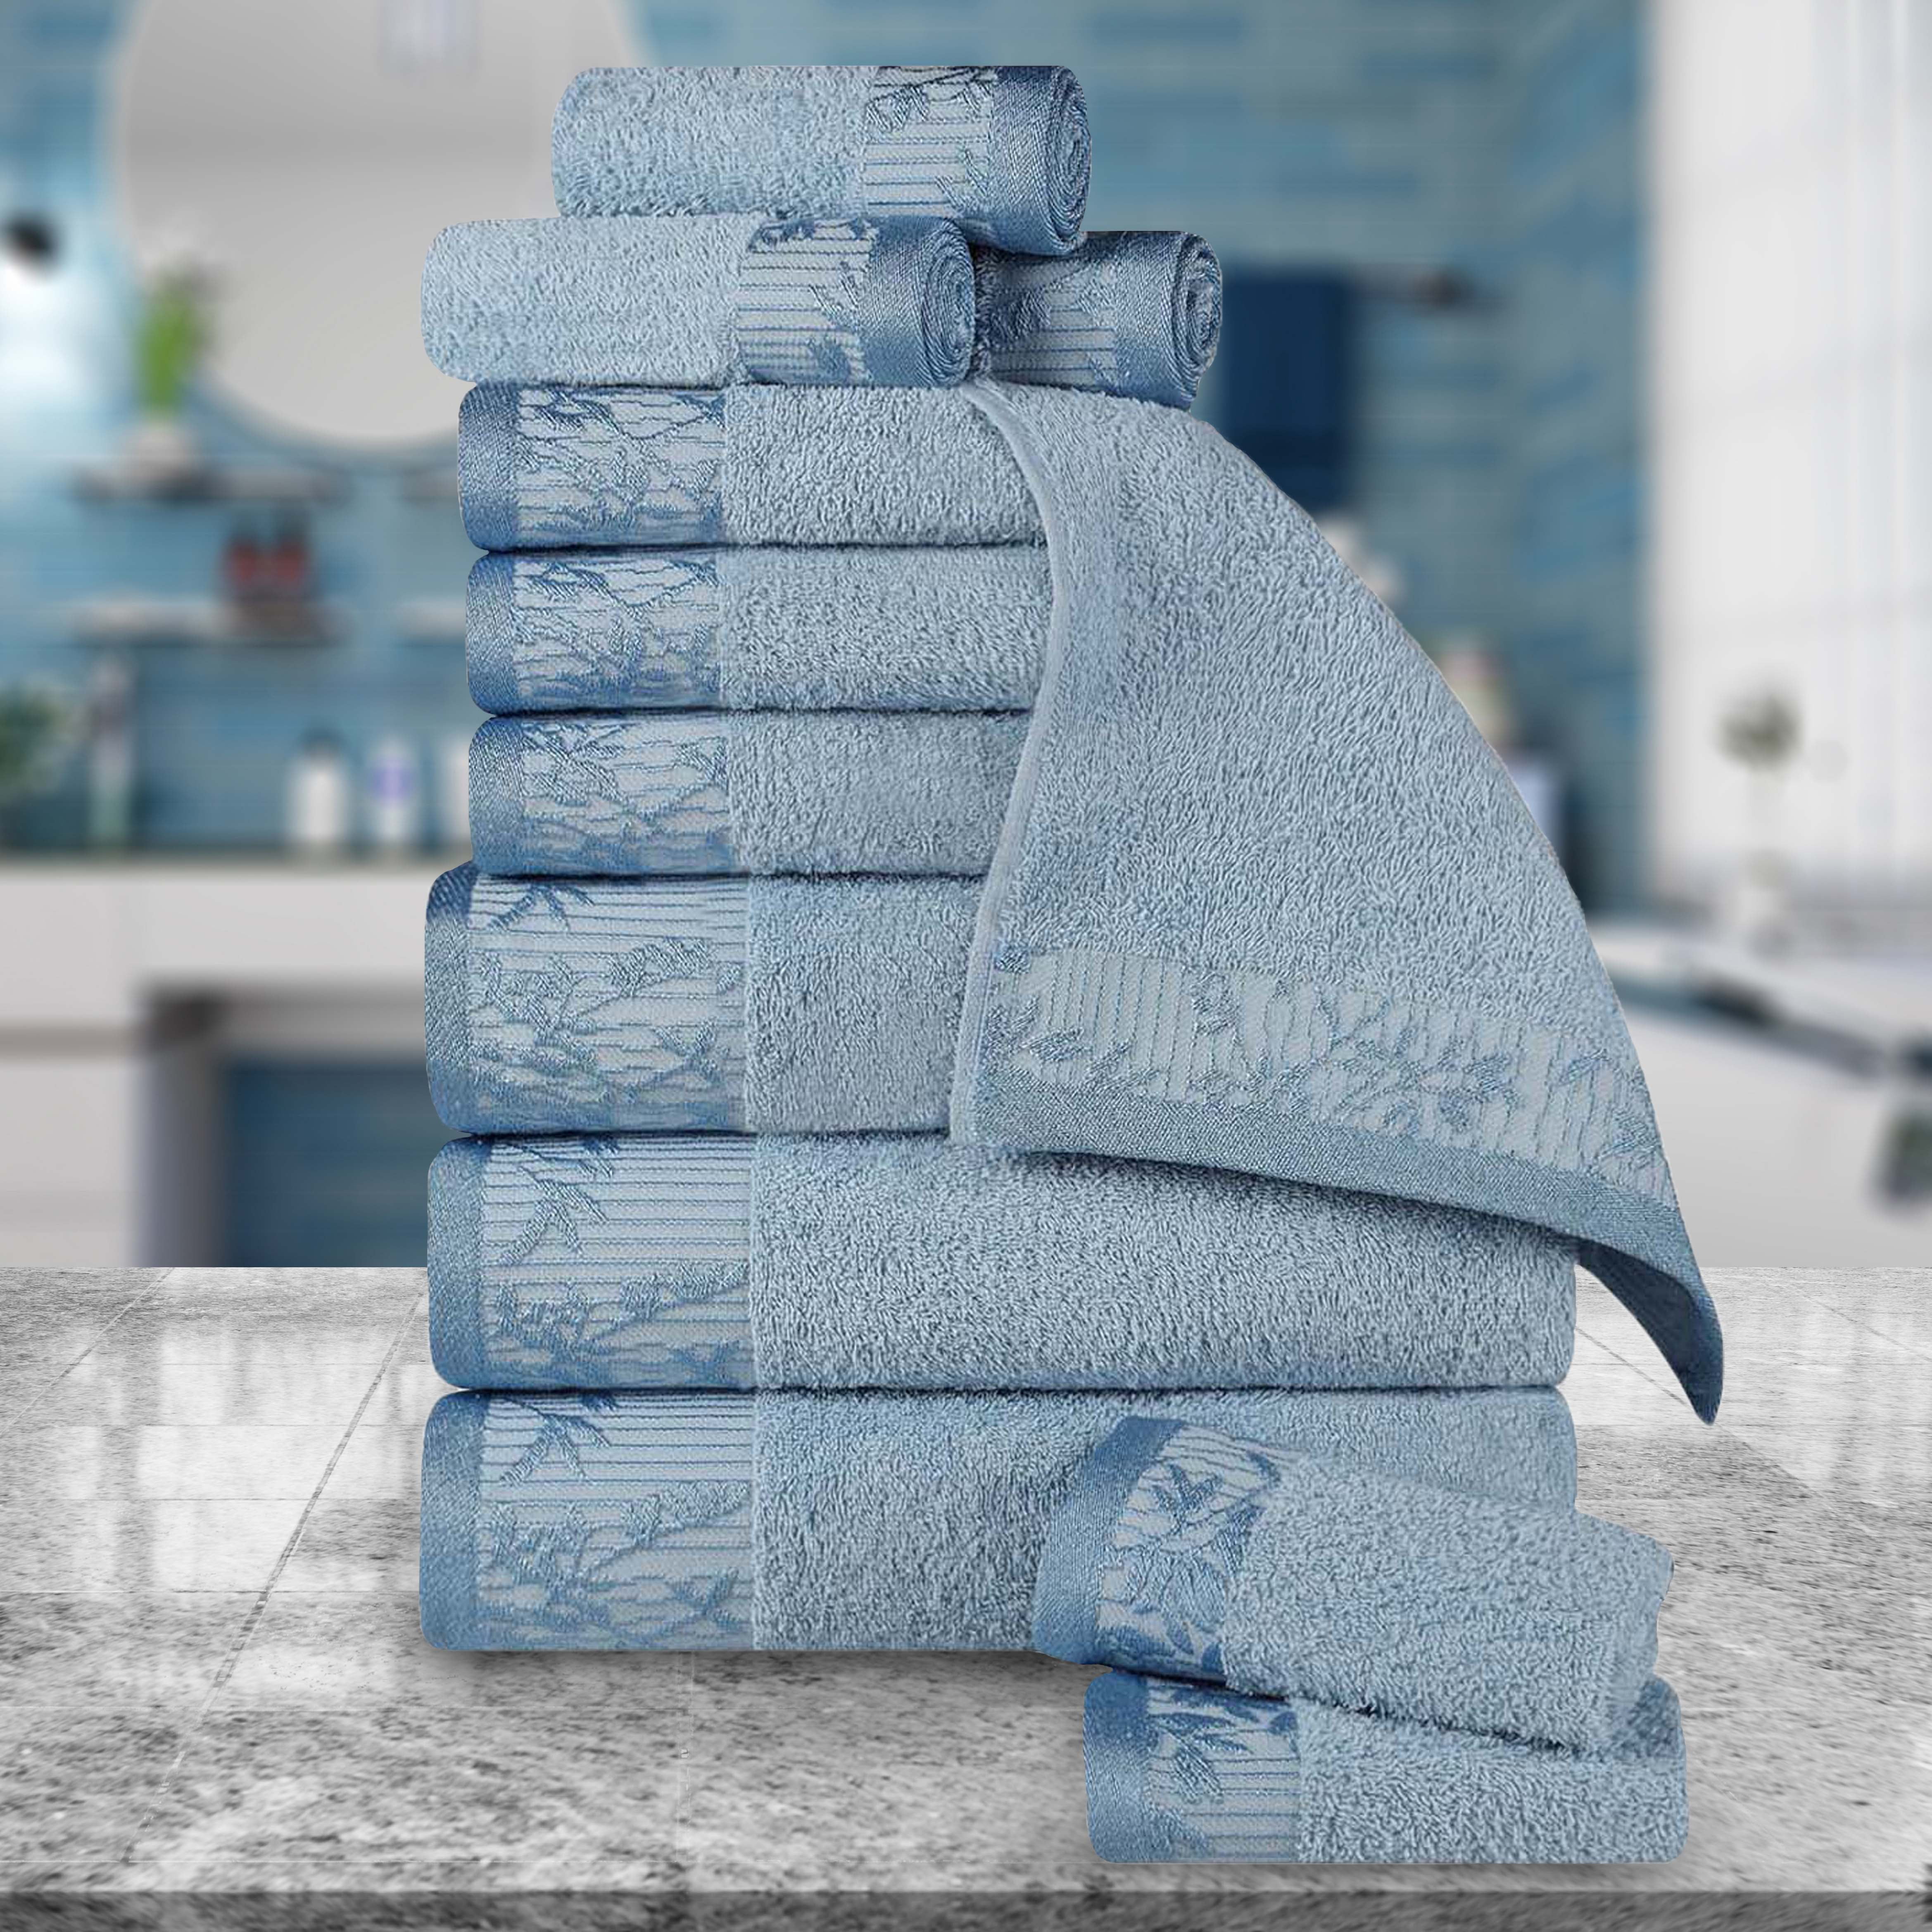 100% Cotton Medium Weight Floral Border Infinity Trim 8 Piece Assorted  Bathroom Towel Set, Black - Blue Nile Mills